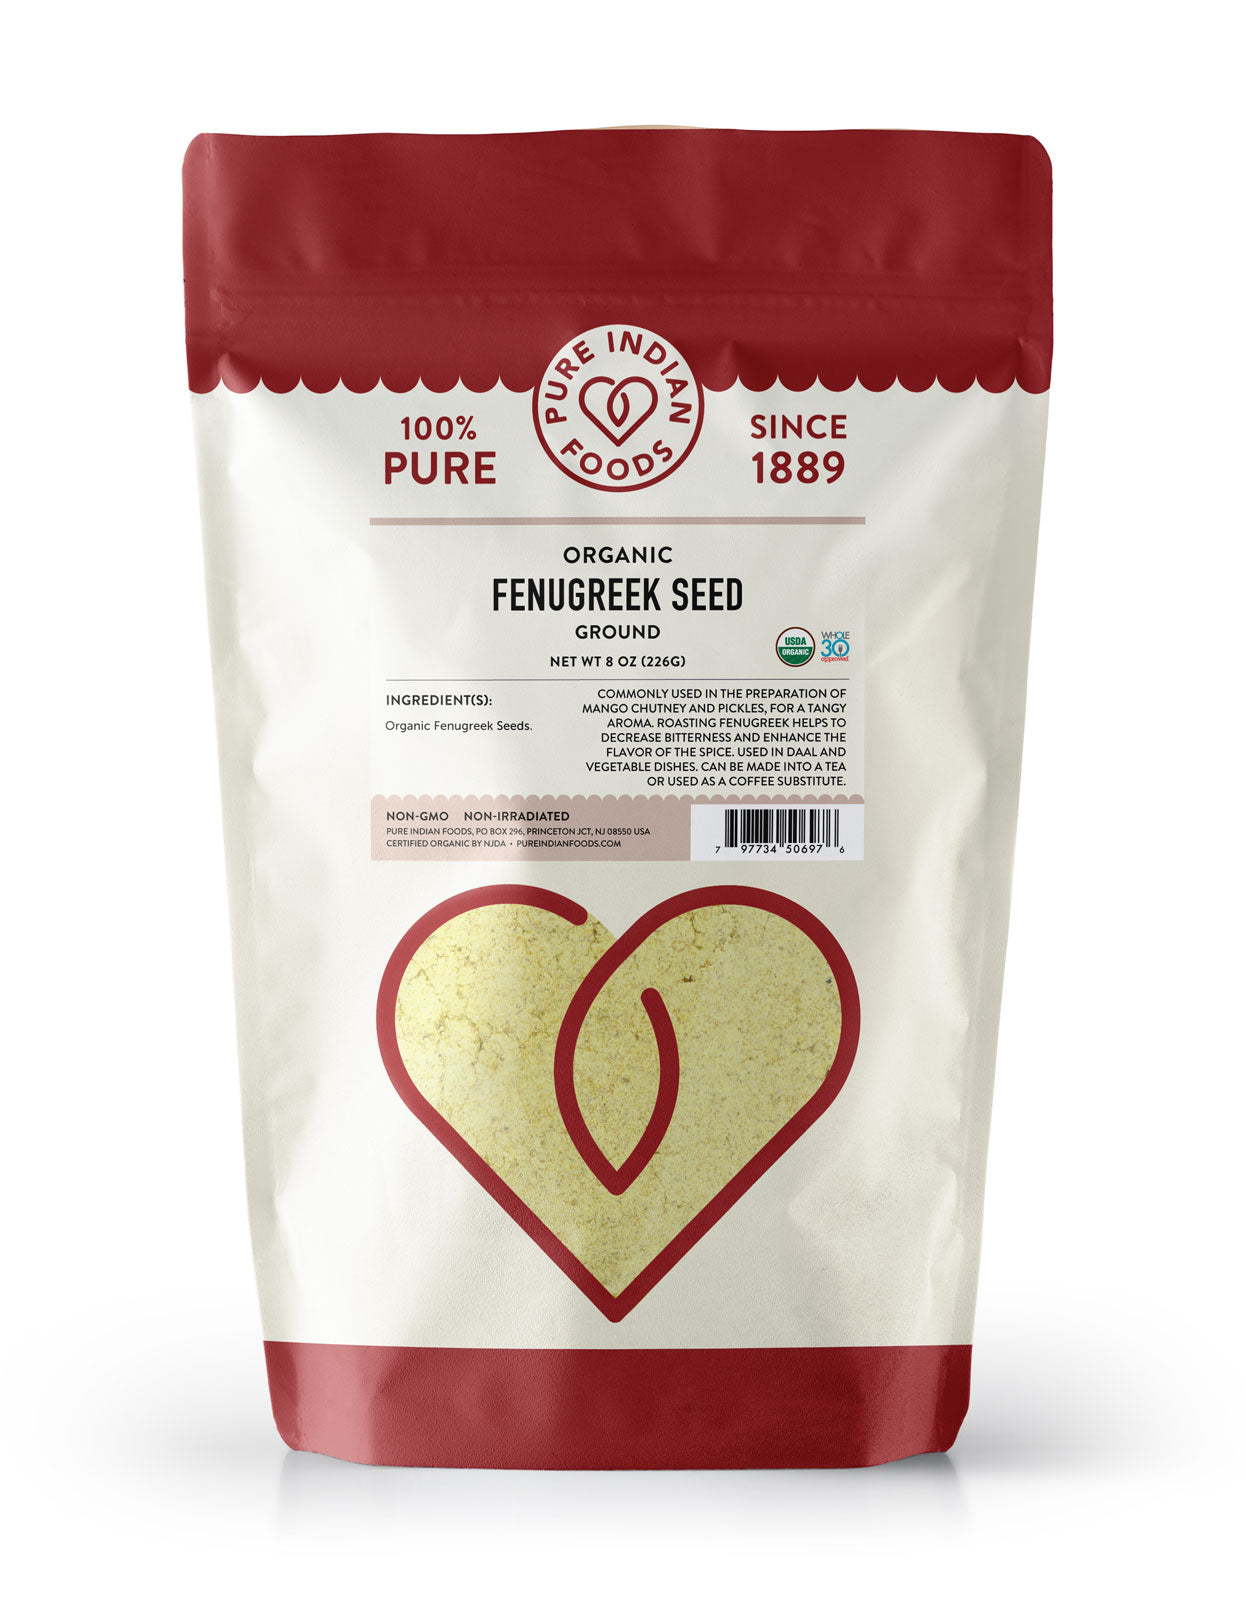 Organic fenugreek powder from Pure Indian Foods, in an 8 oz bag.